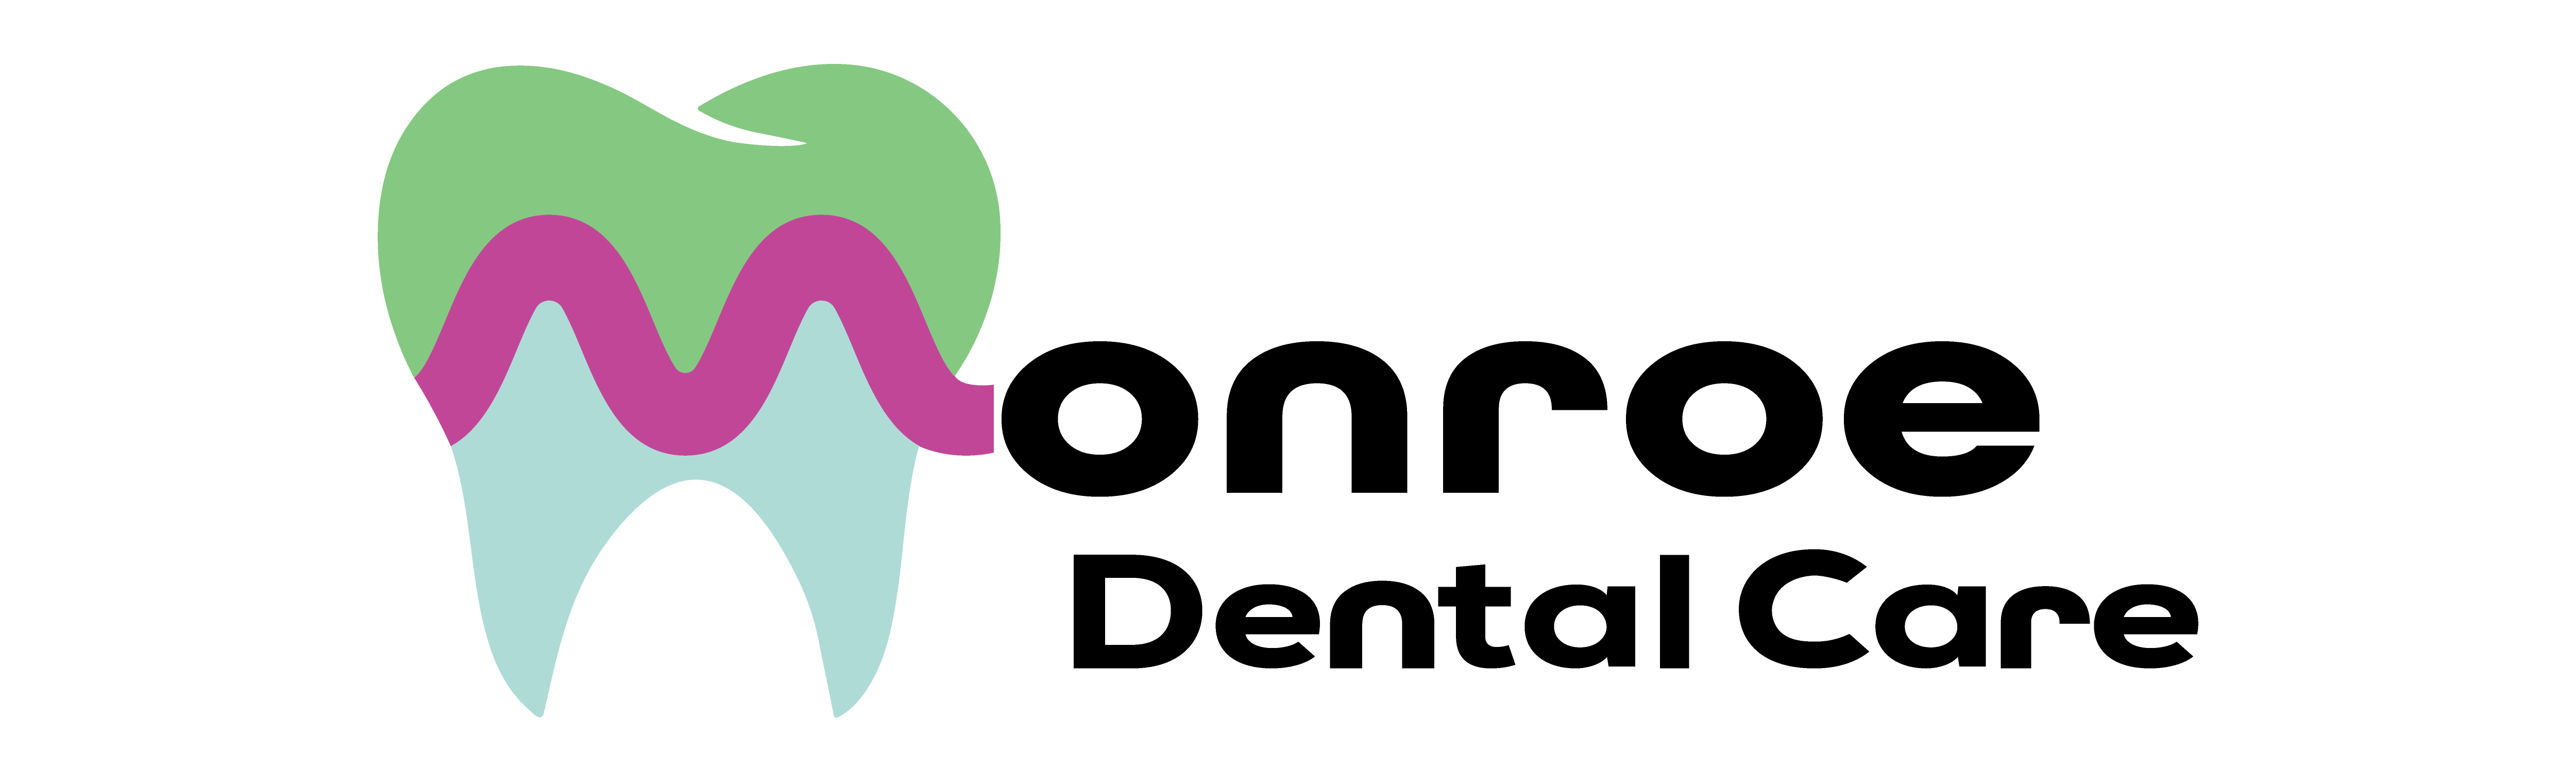 Monroe Dental Care